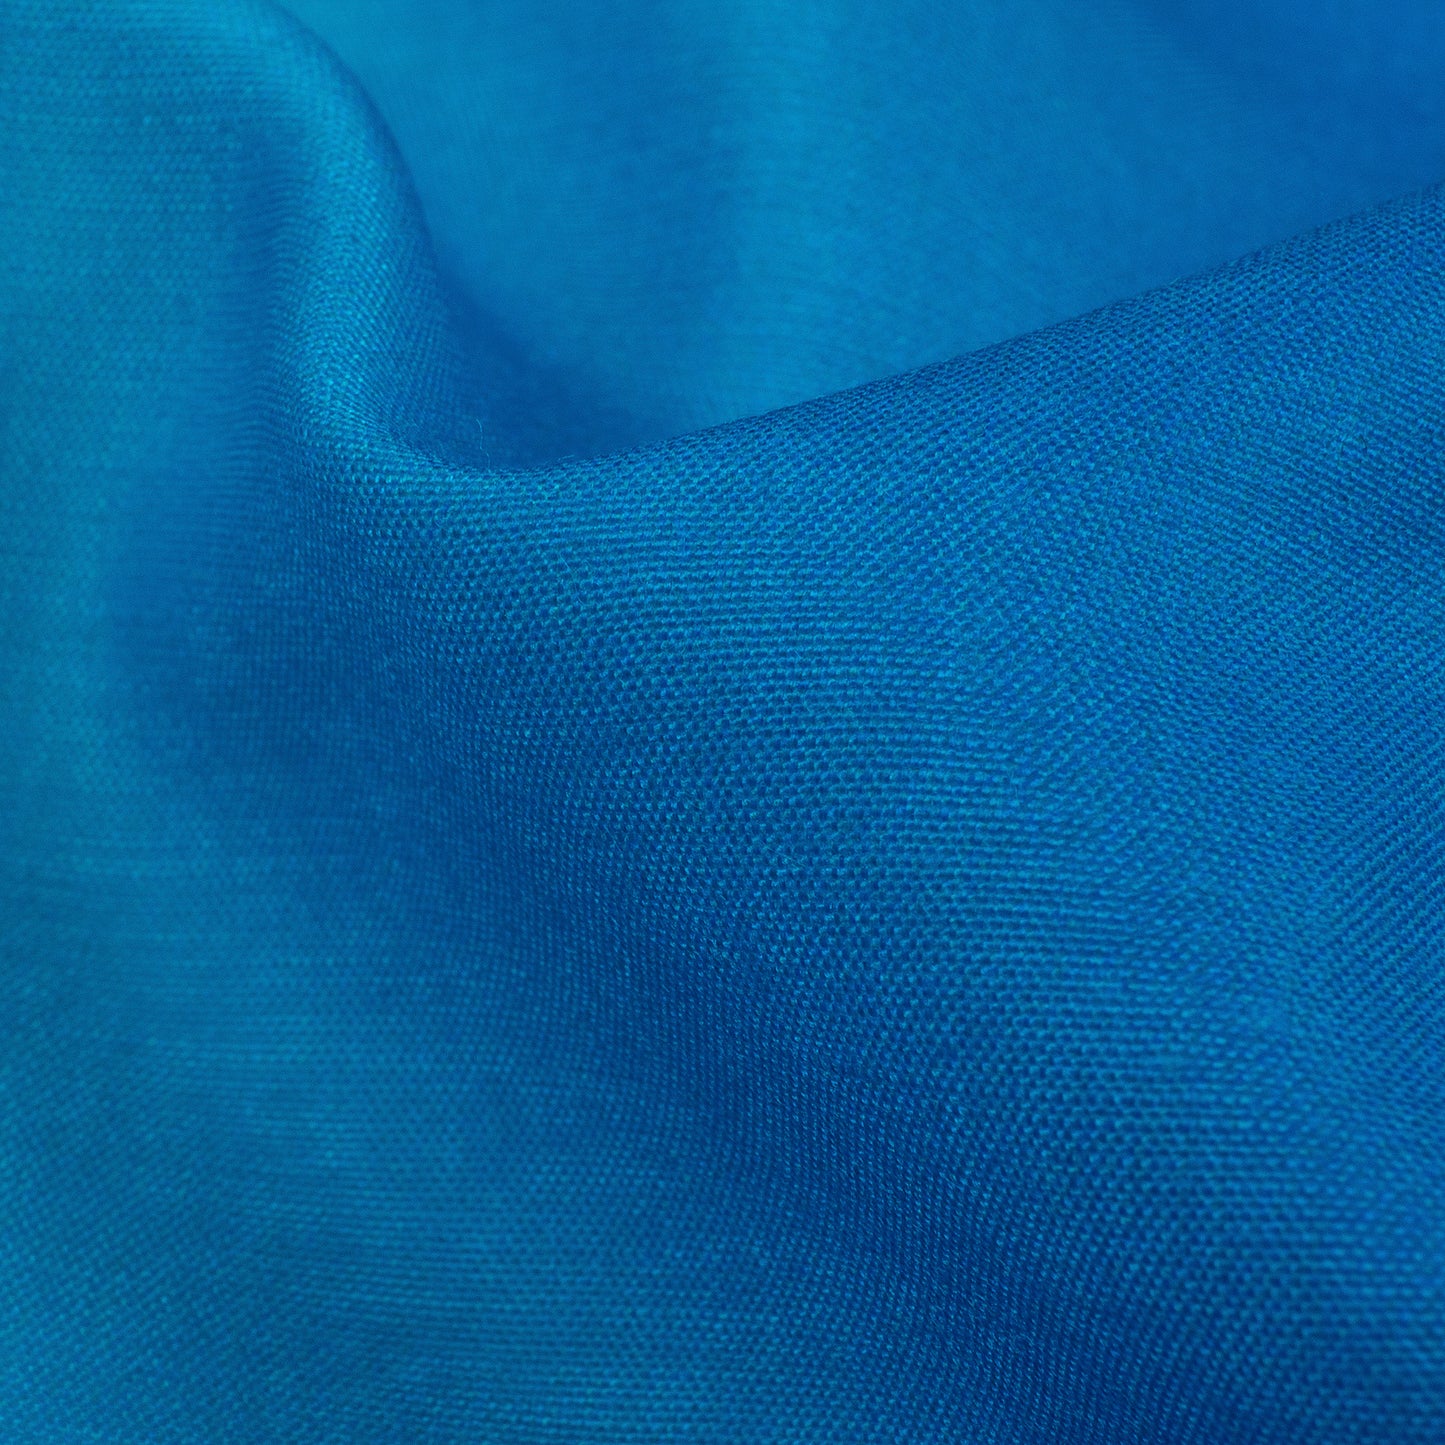 Azure Blue Ombre Pattern Digital Print Muslin Fabric